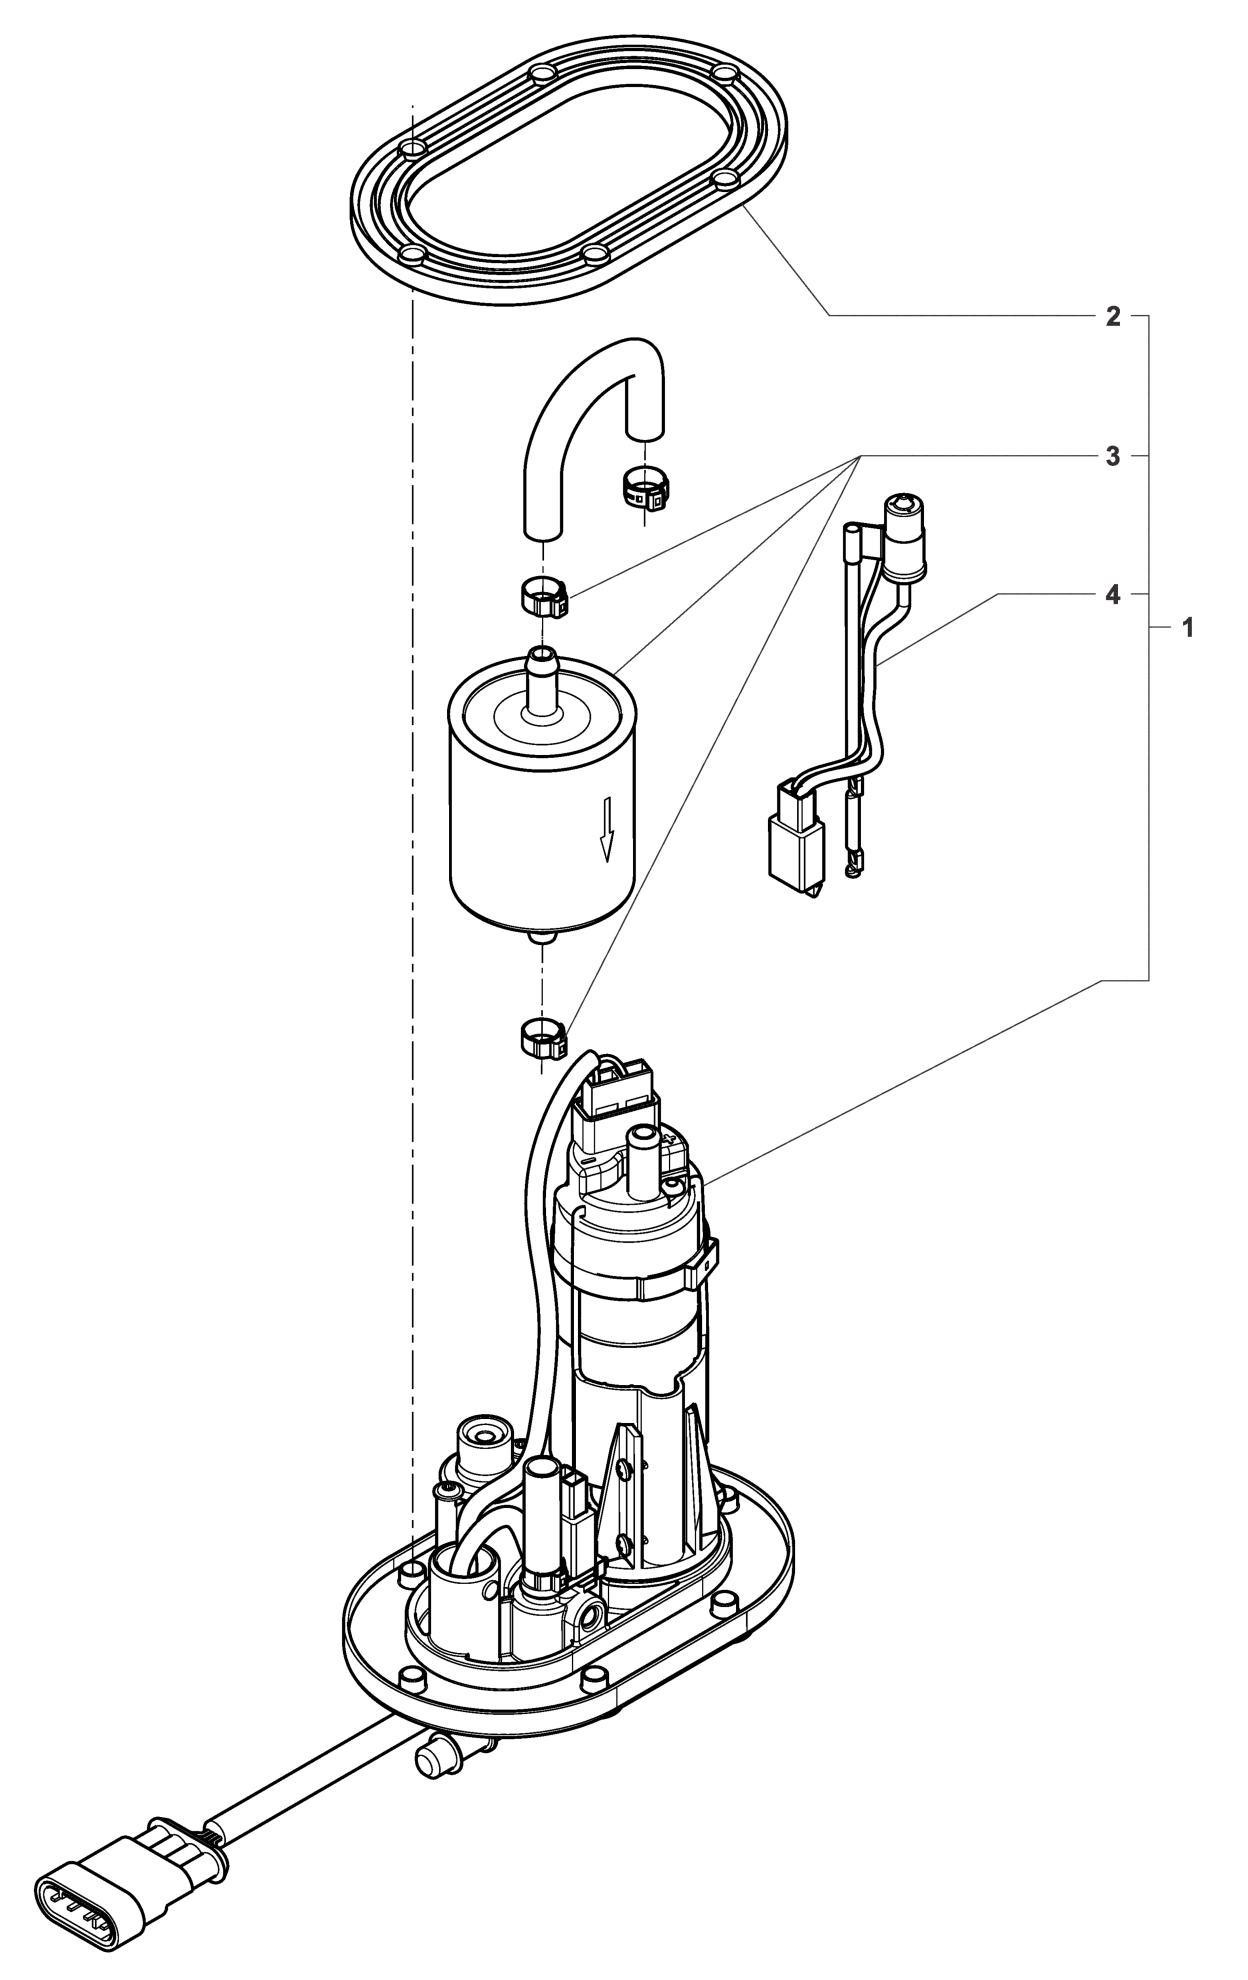 Fuel Pump Assembly


